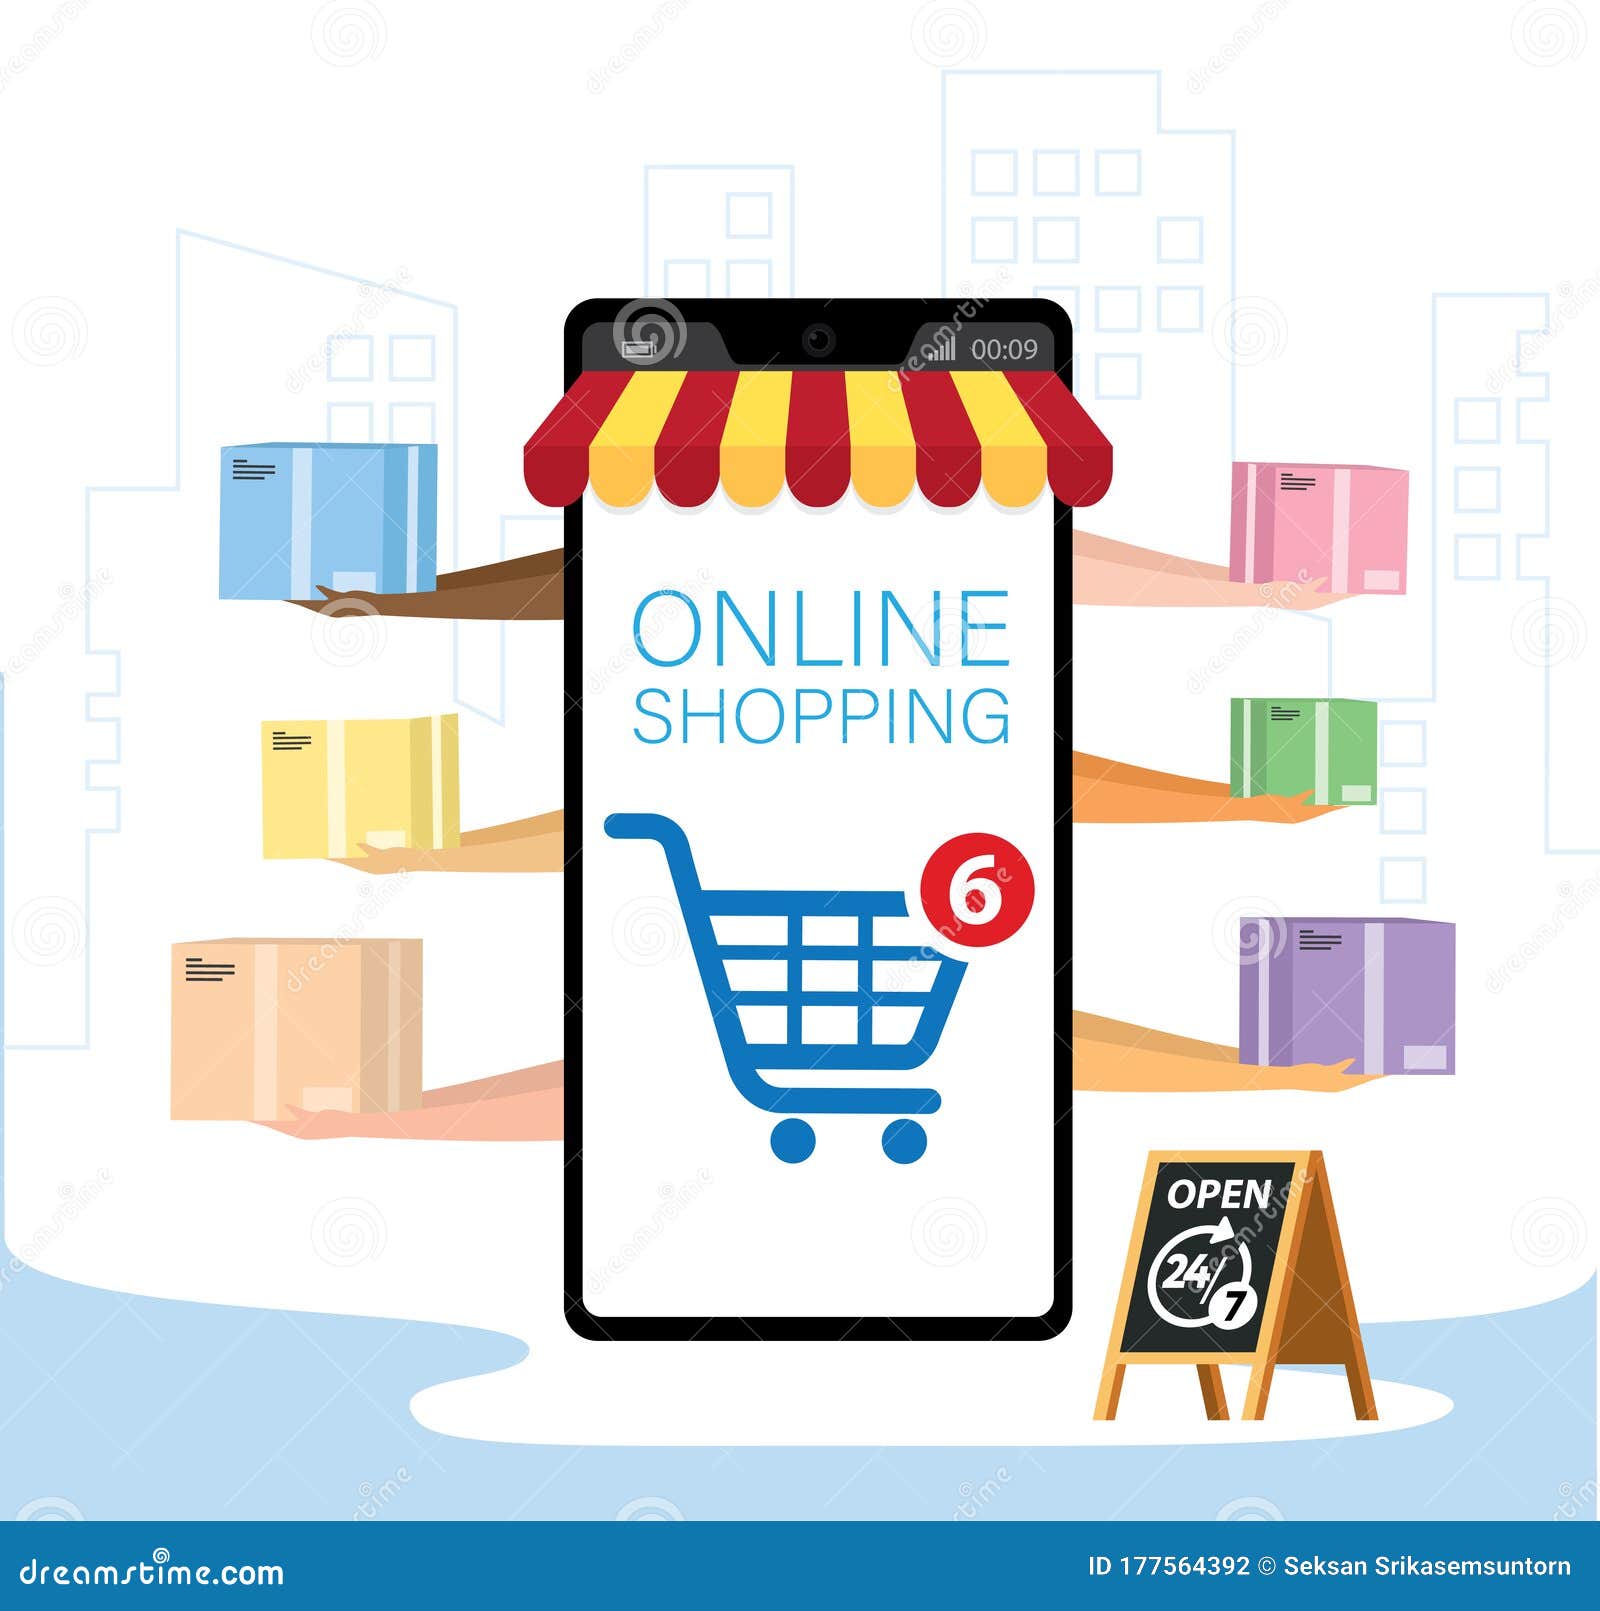 mobile application for shopping, online supermaket